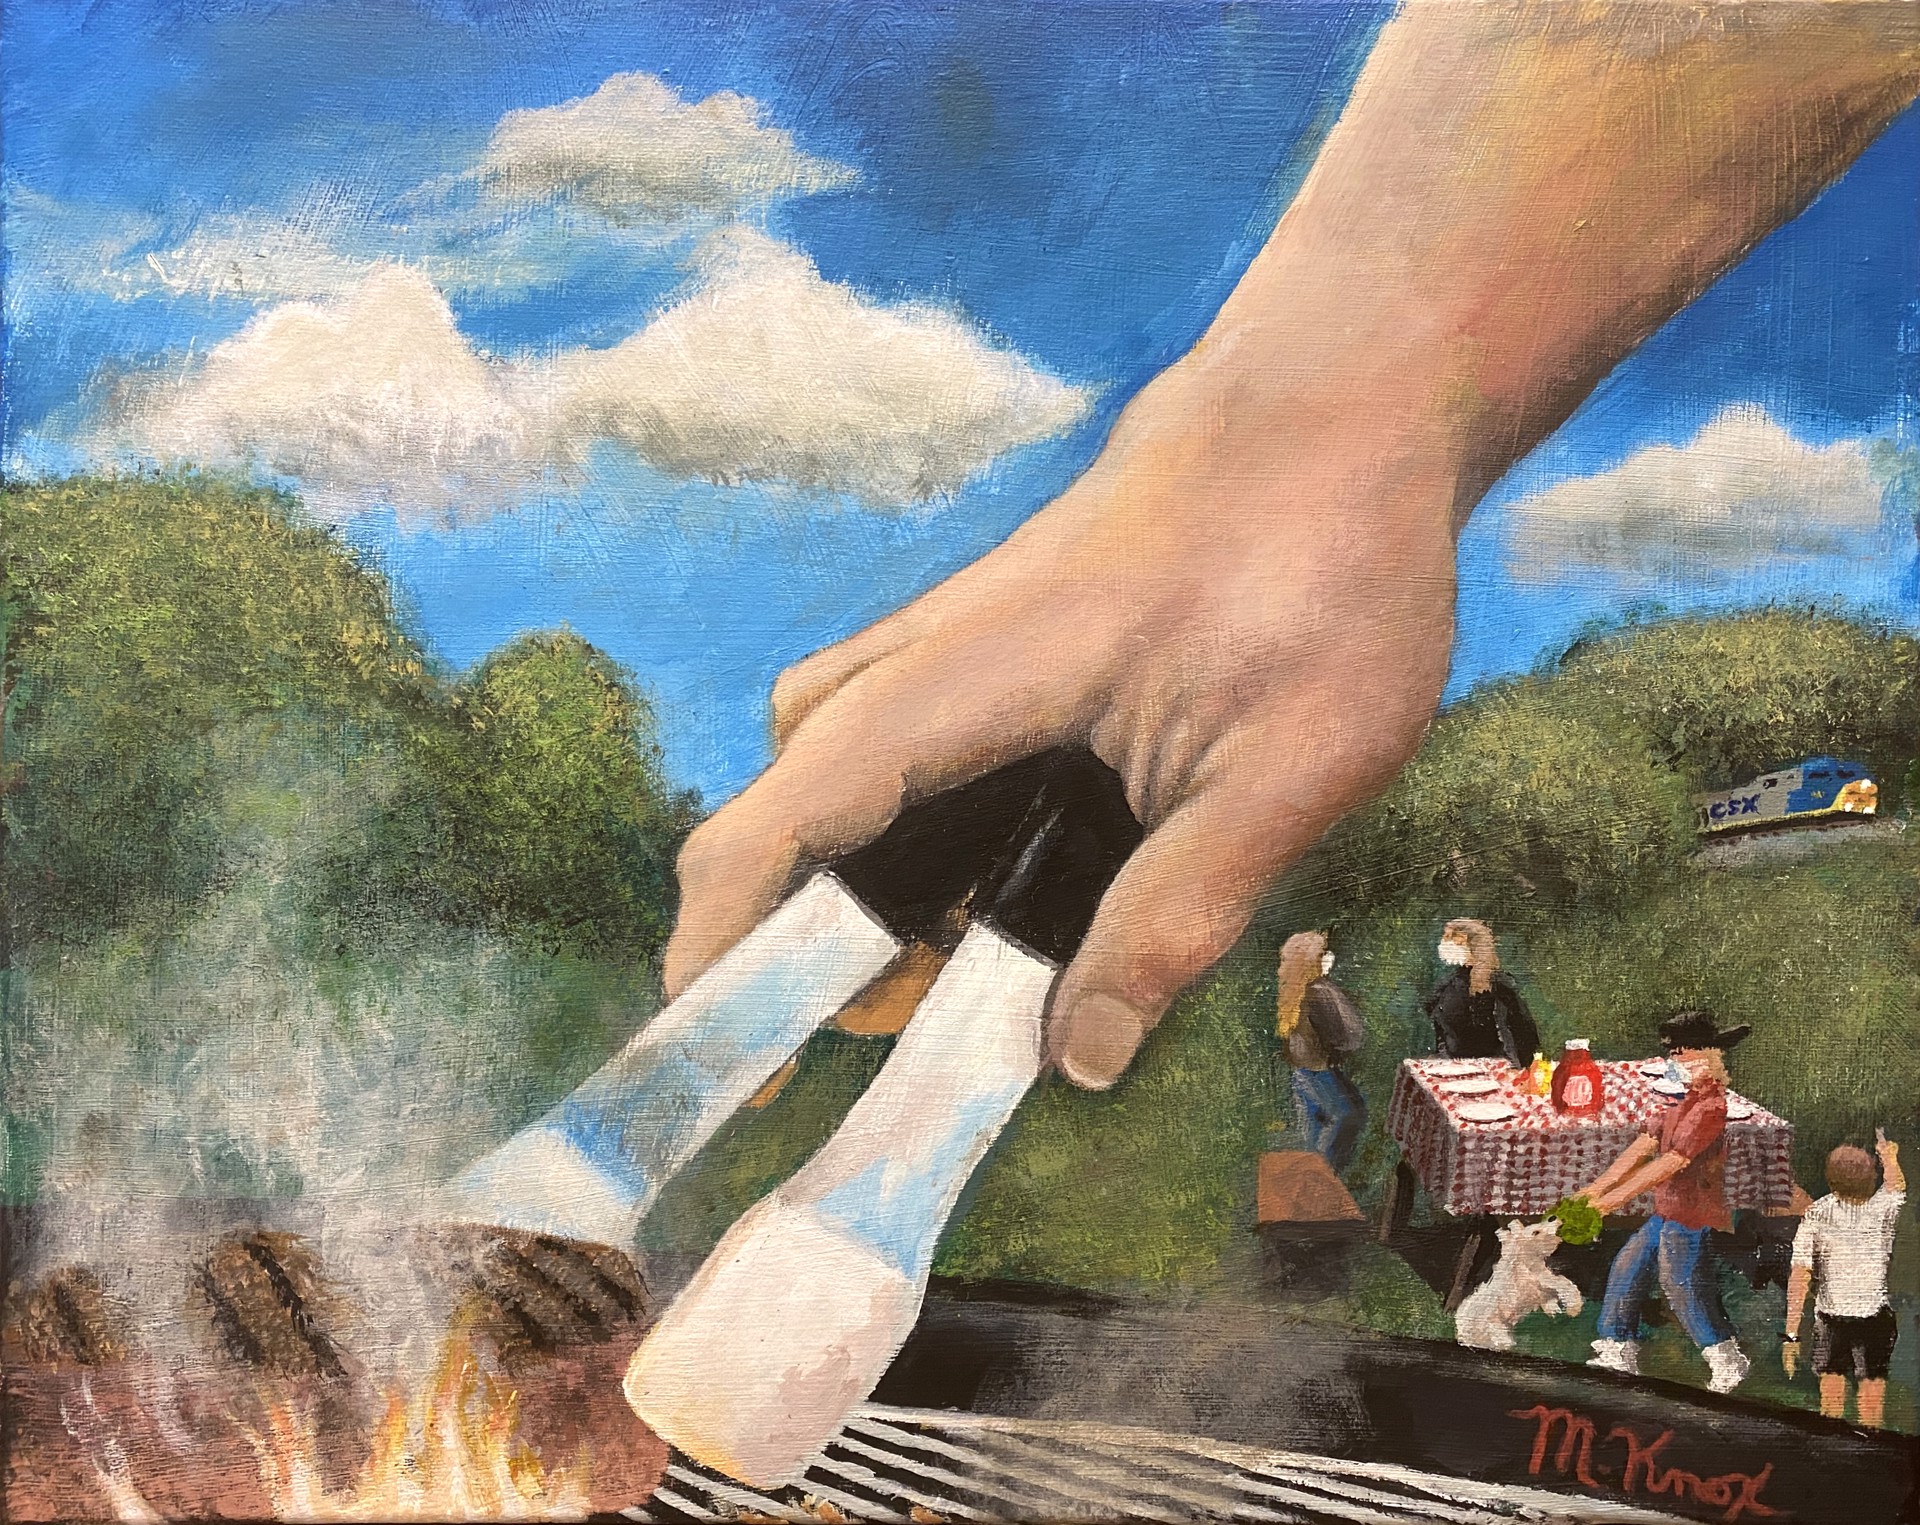 Backyard BBQ 2020 by Mike Knox